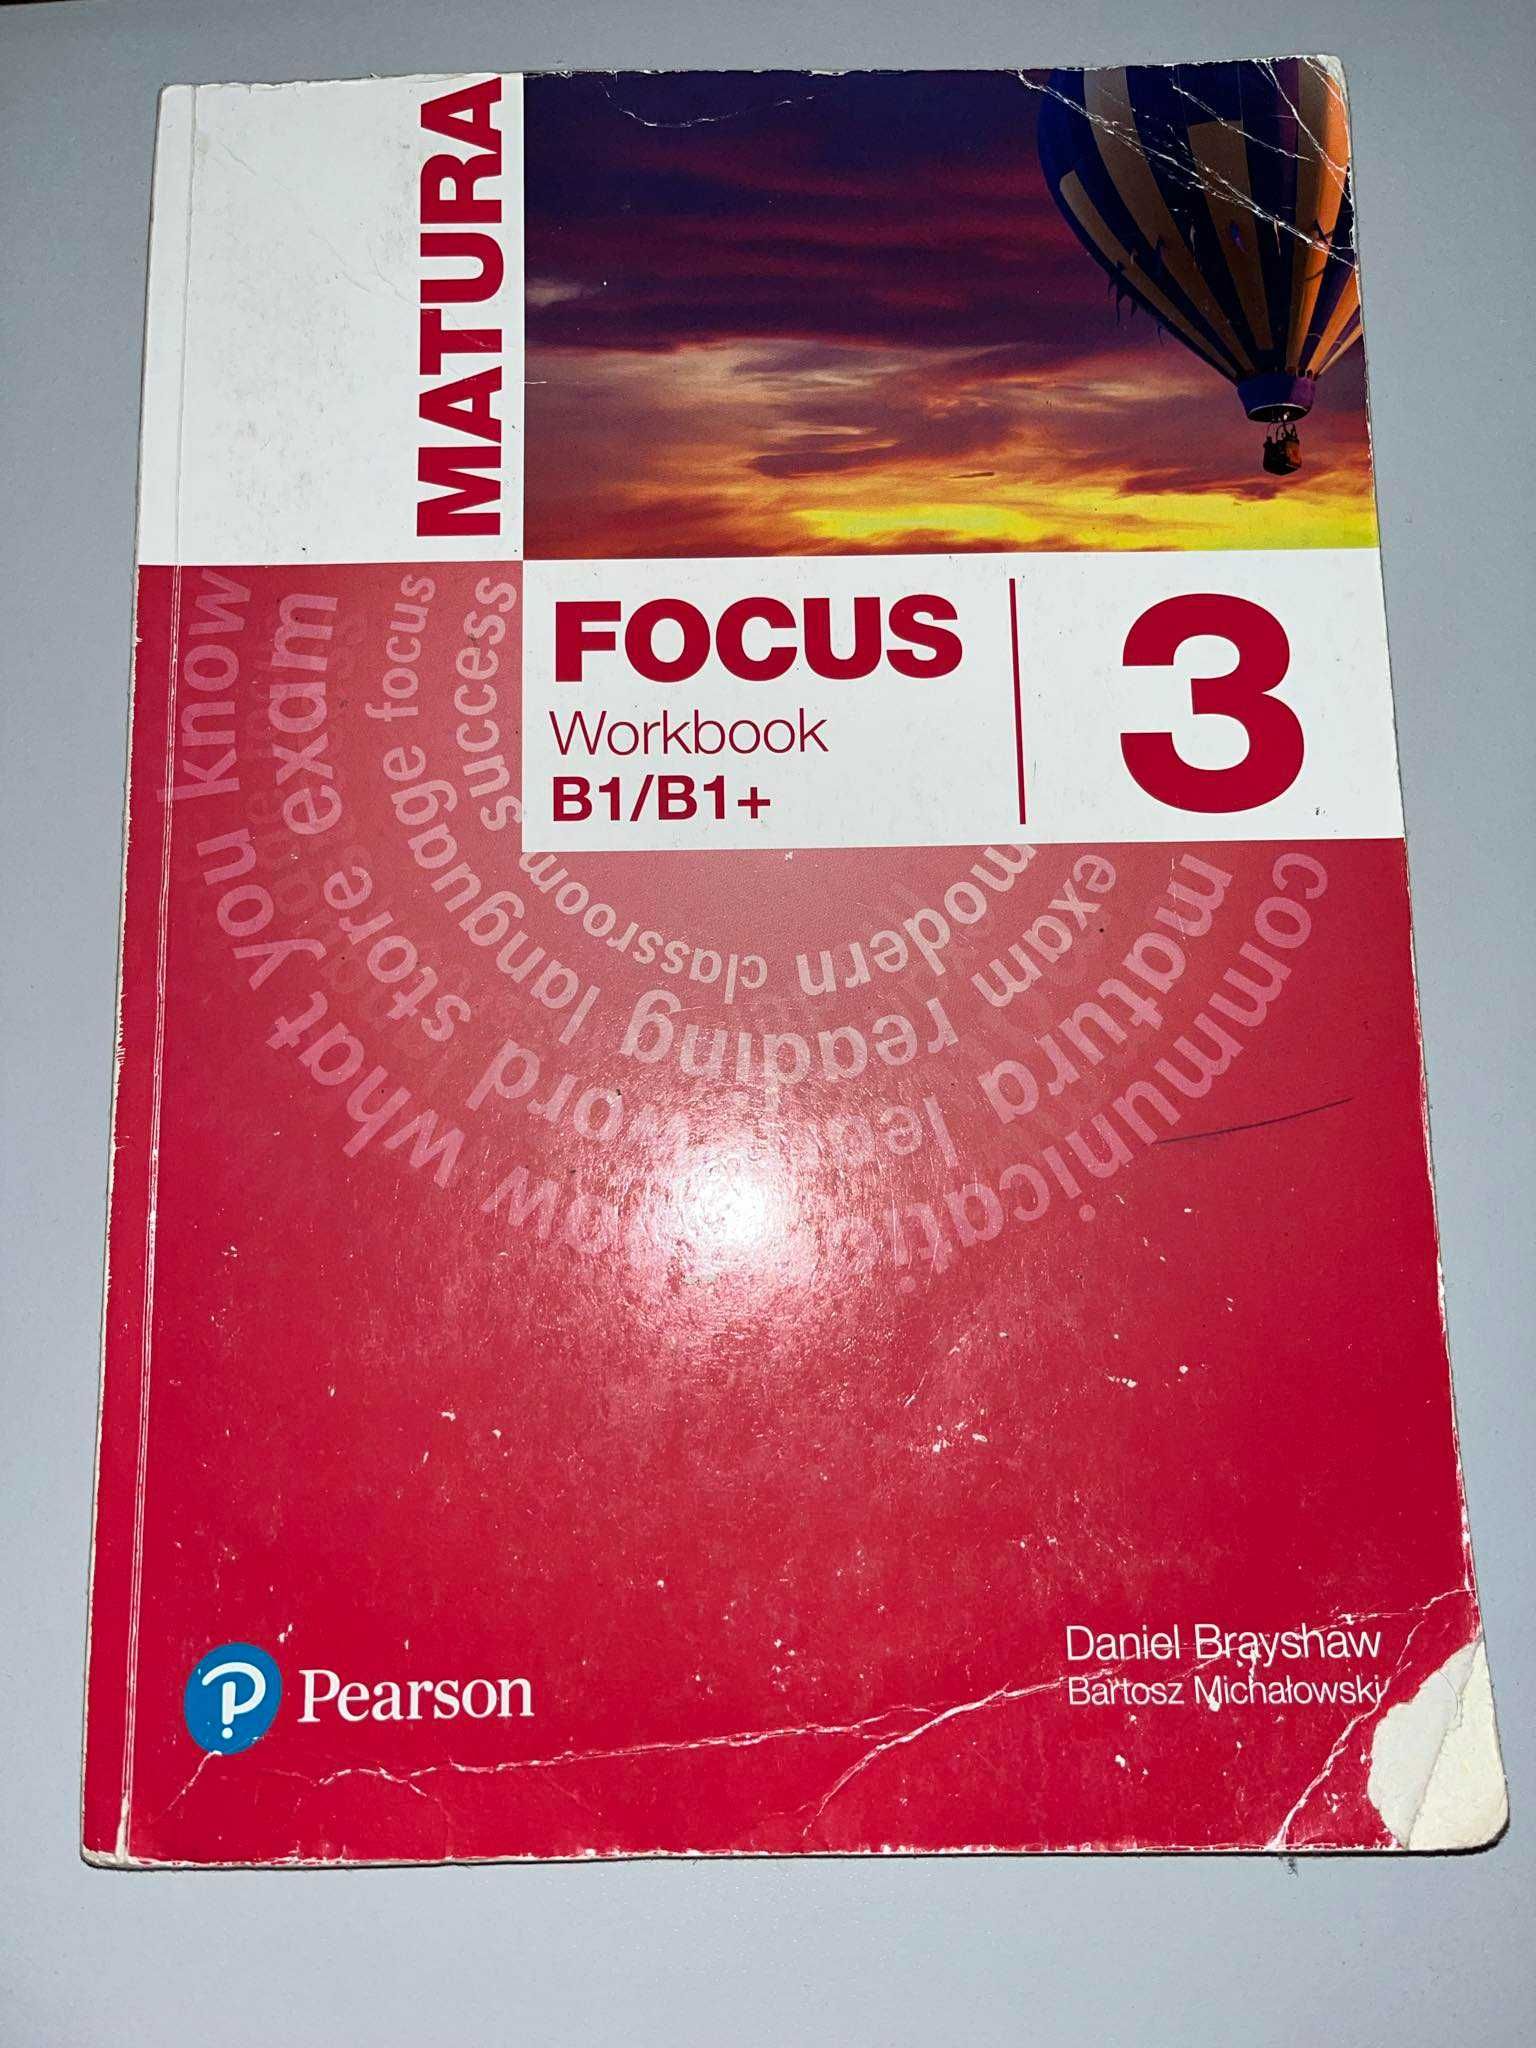 Zeszyt ćwiczeń Matura Focus 3 Workbook B1/B1+ Pearson